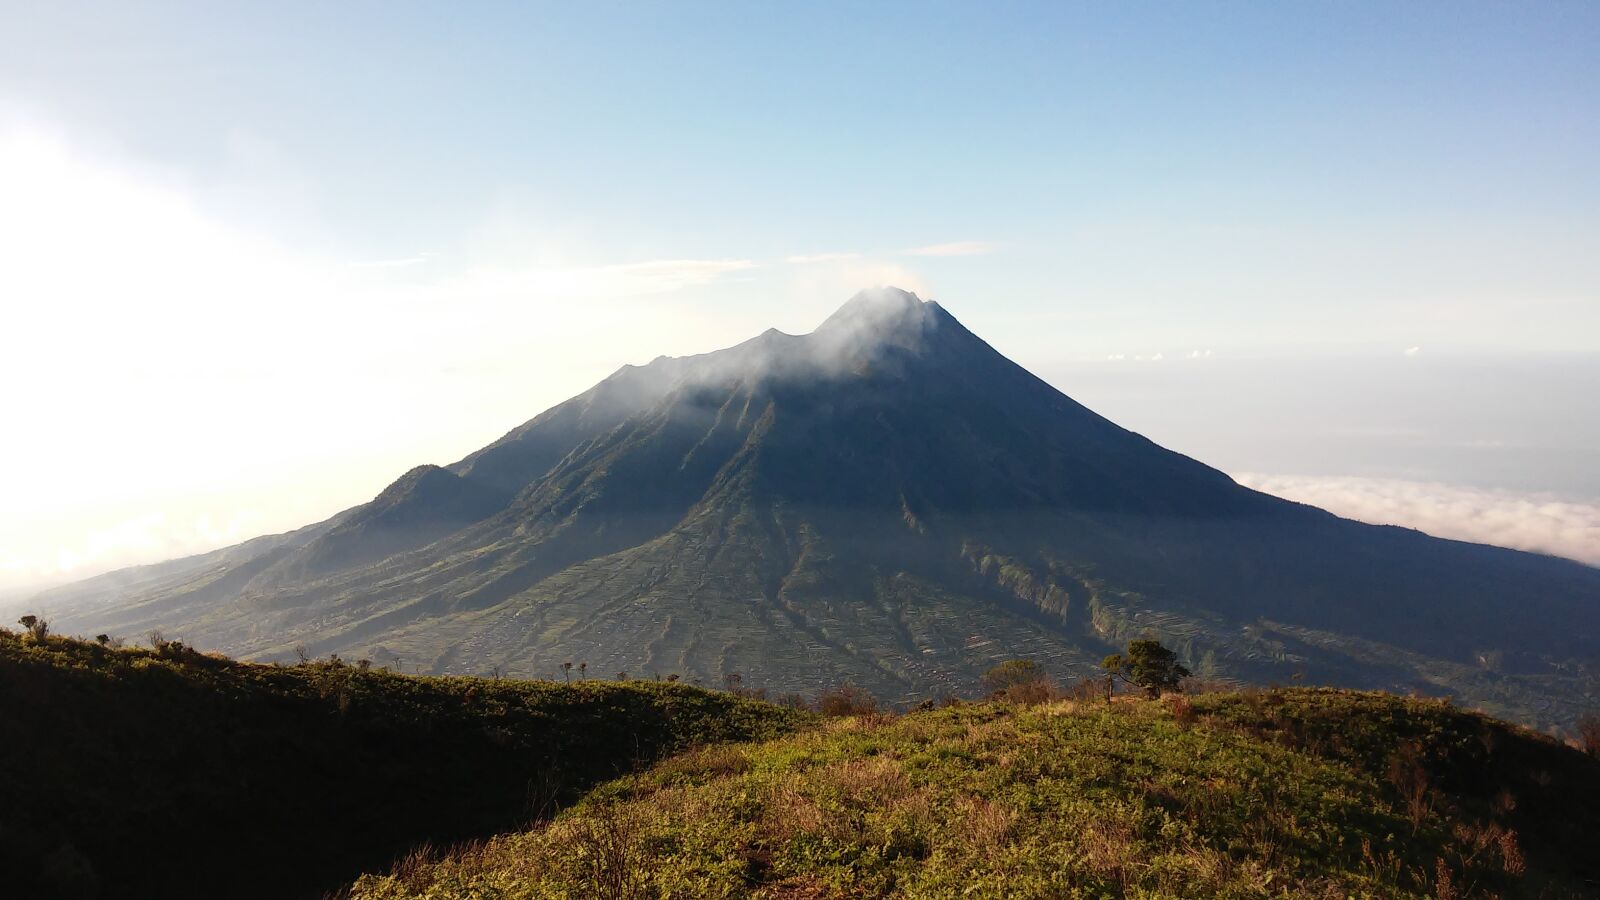 LG G2 MINI sample photo. Mount, volcano, landscape photography